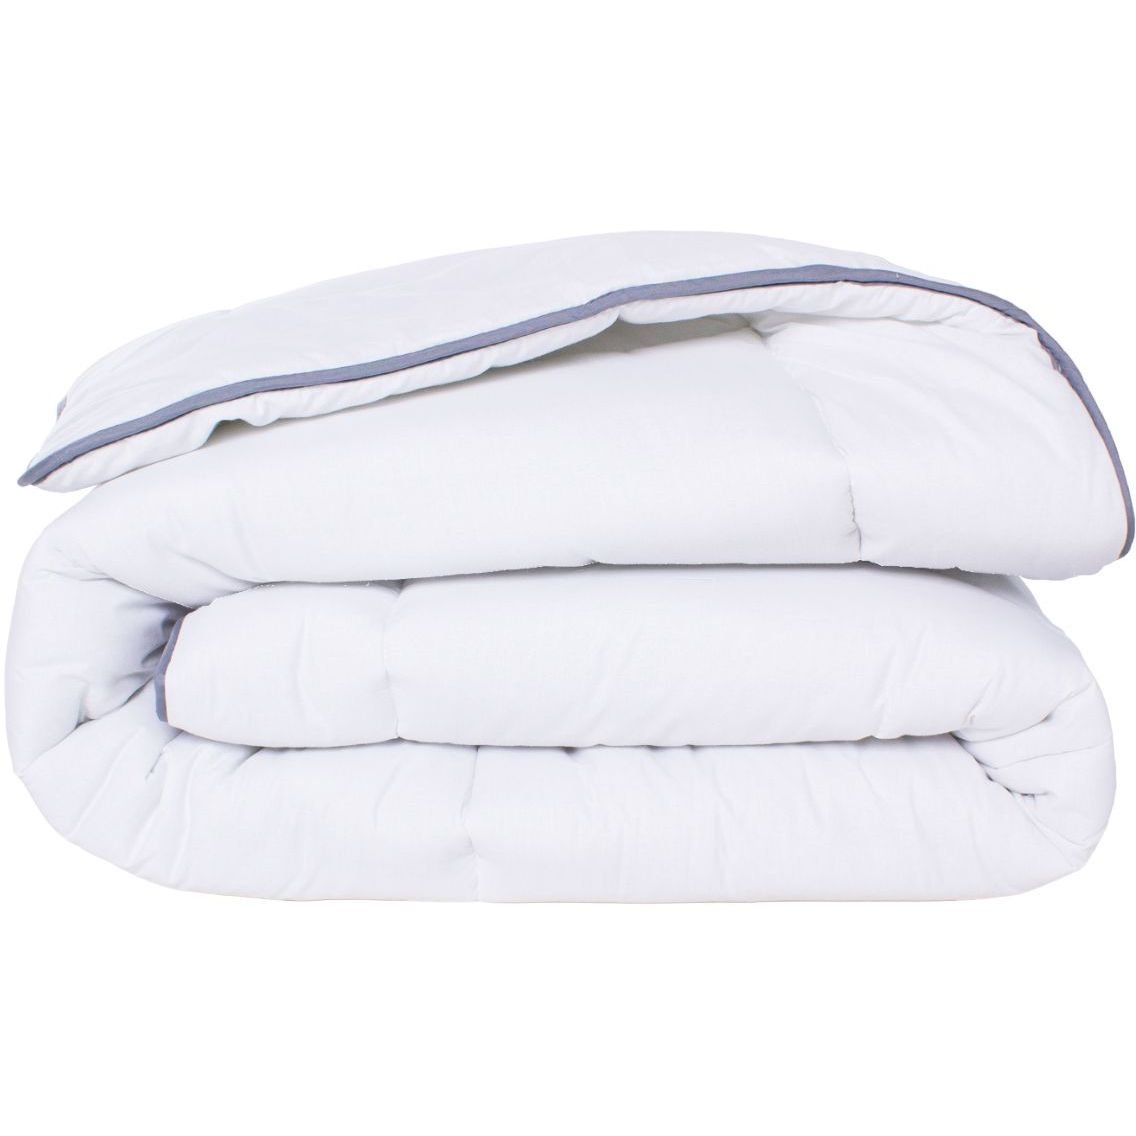 Одеяло шерстяное MirSon Royal №026, демисезонное, 200x220 см, белое - фото 1